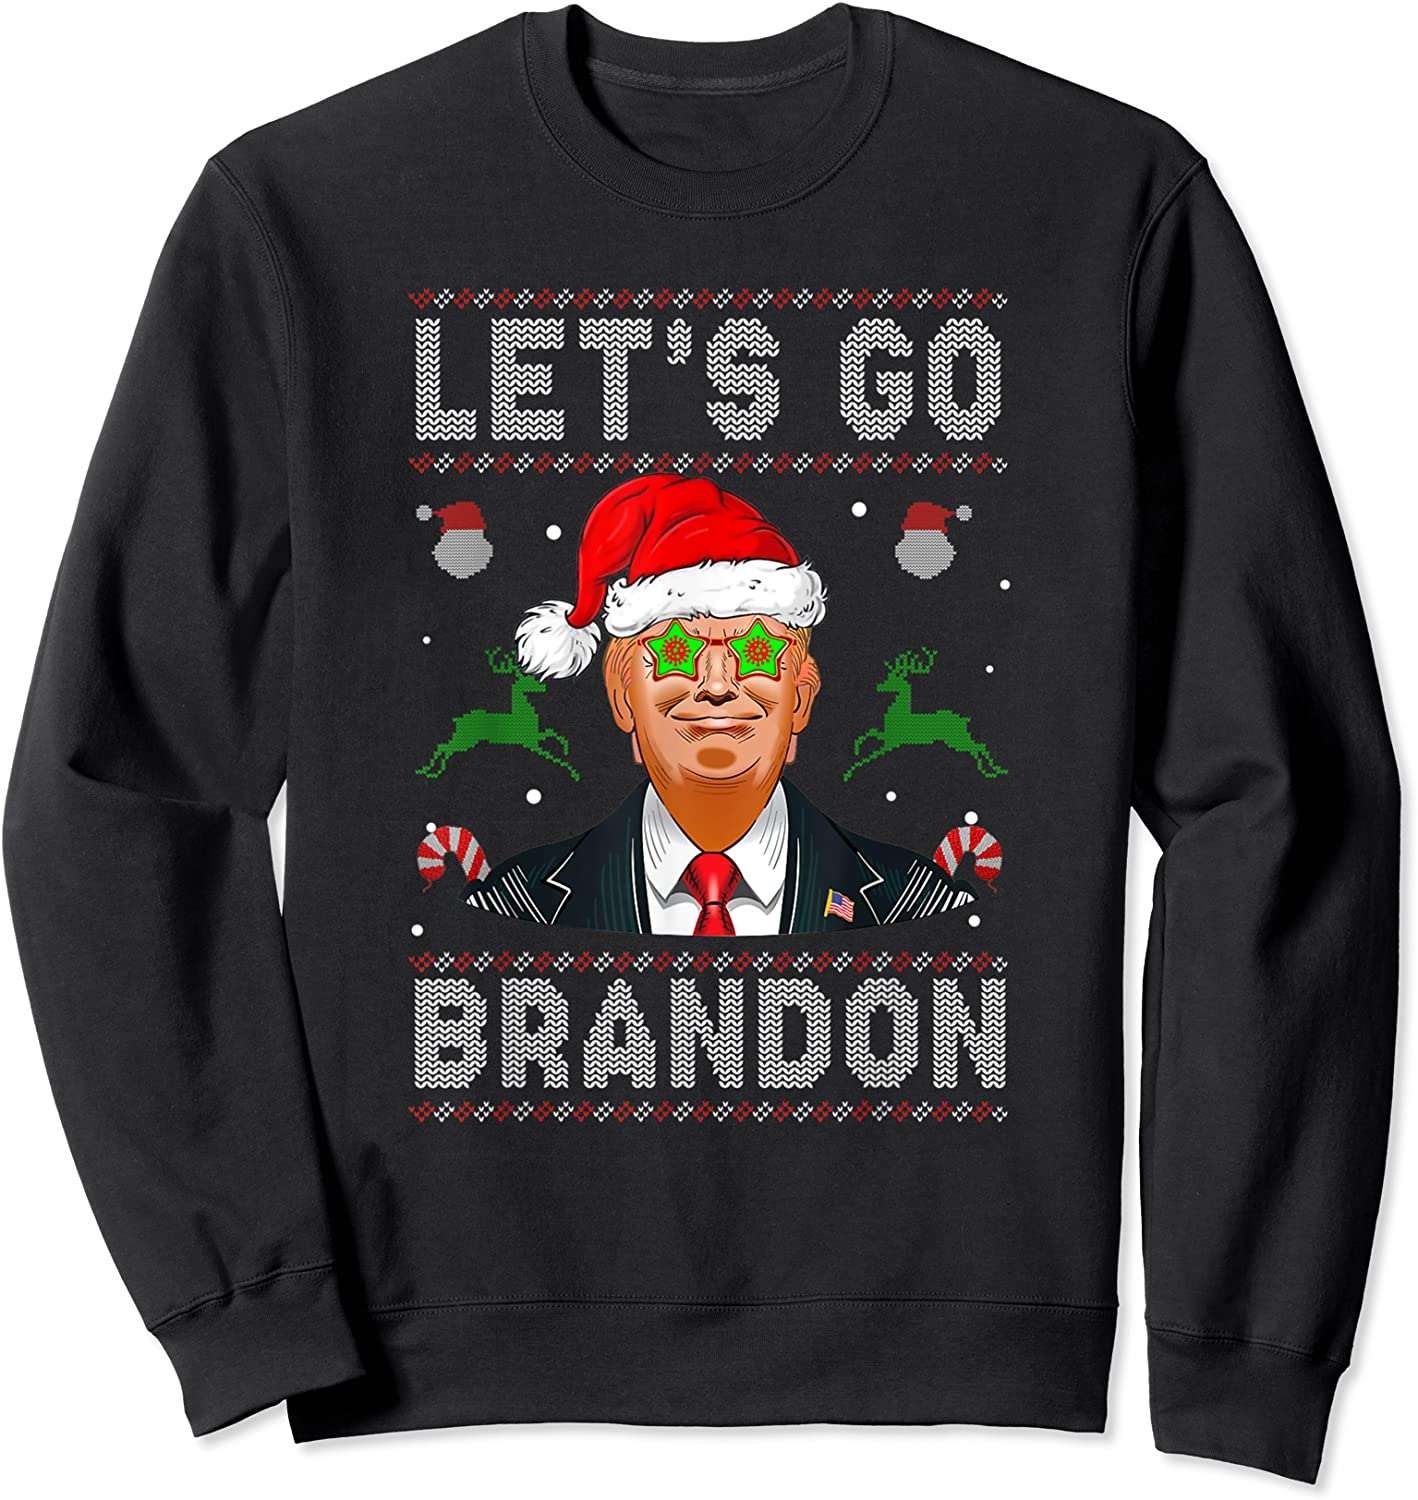 Go Brandon Shirt, Let's Go Brandon FJB